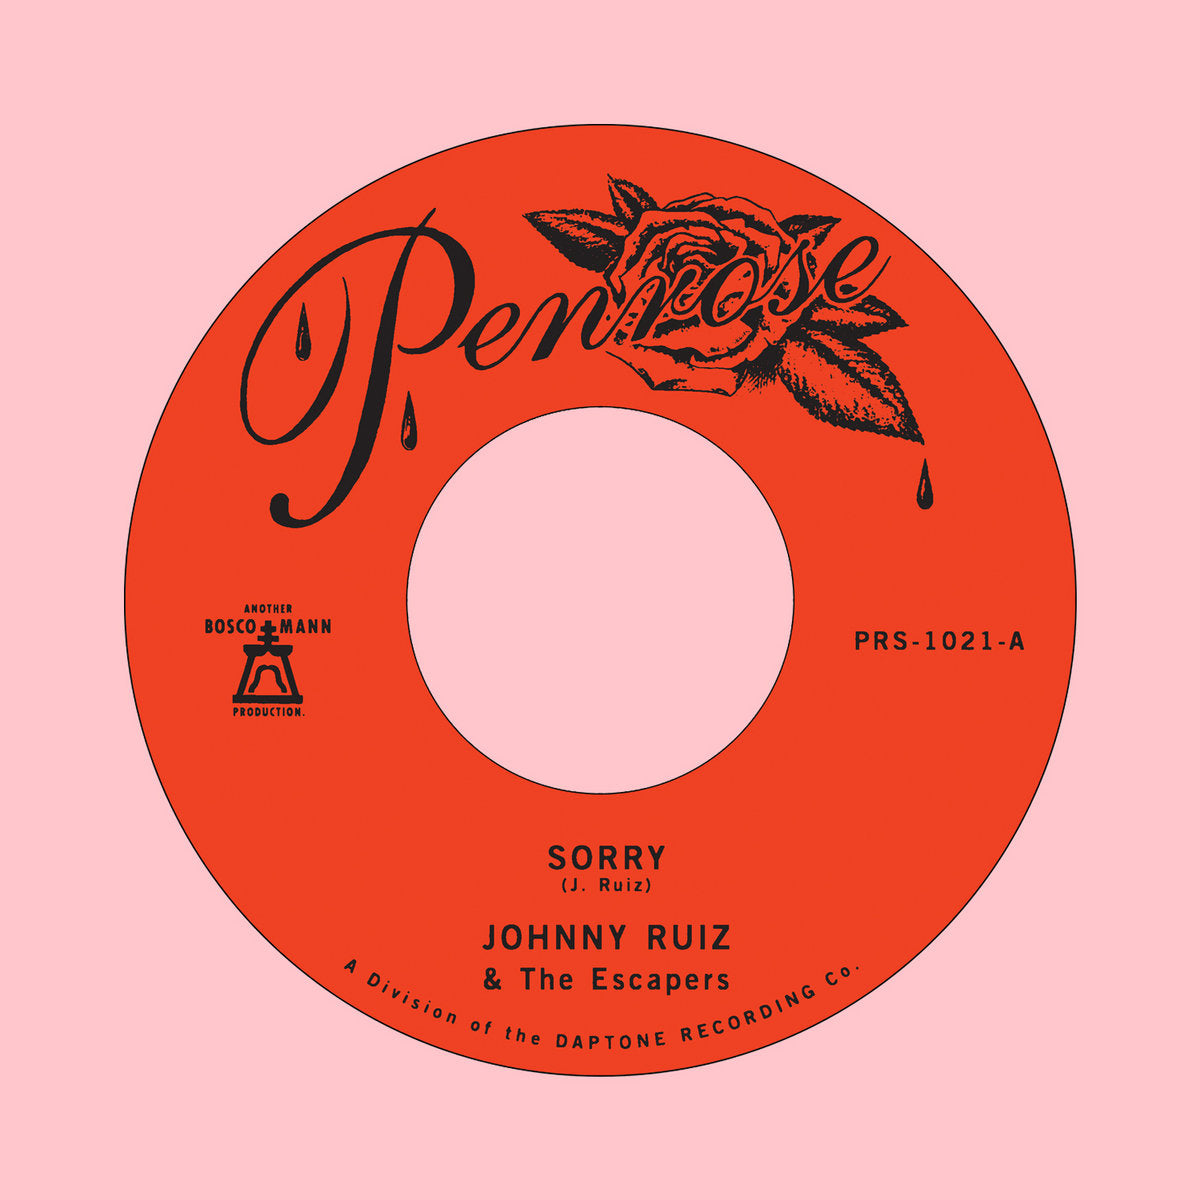 JOHNNY RUIZ & THE ESCAPERS - SORRY b/w PRETTIEST GIRL Vinyl 7"